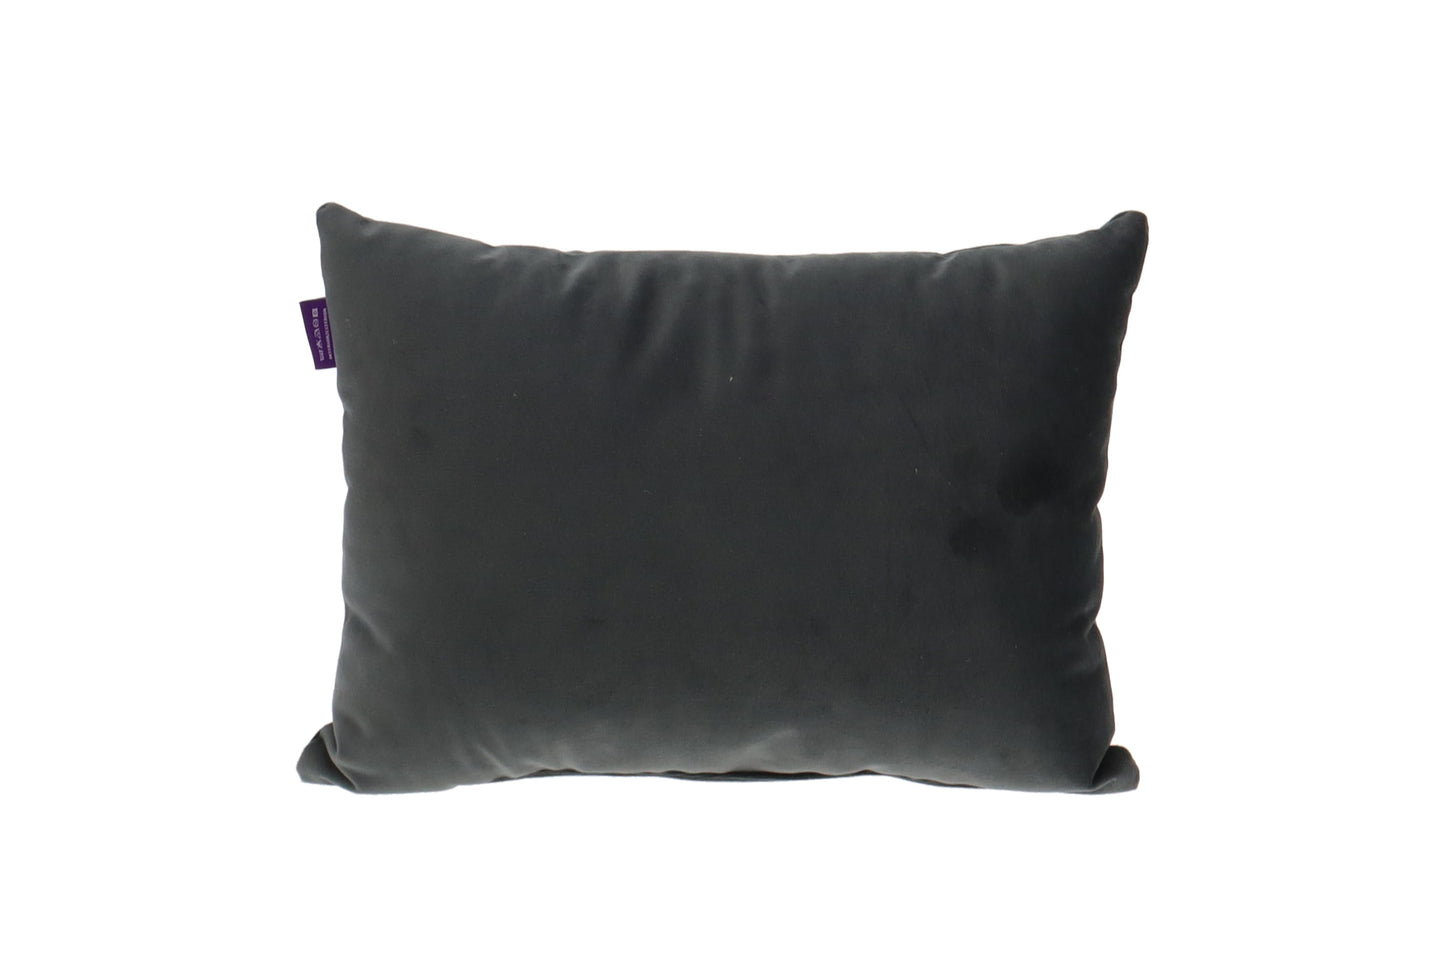 Bag Pillow Grey Velvet Combined Large